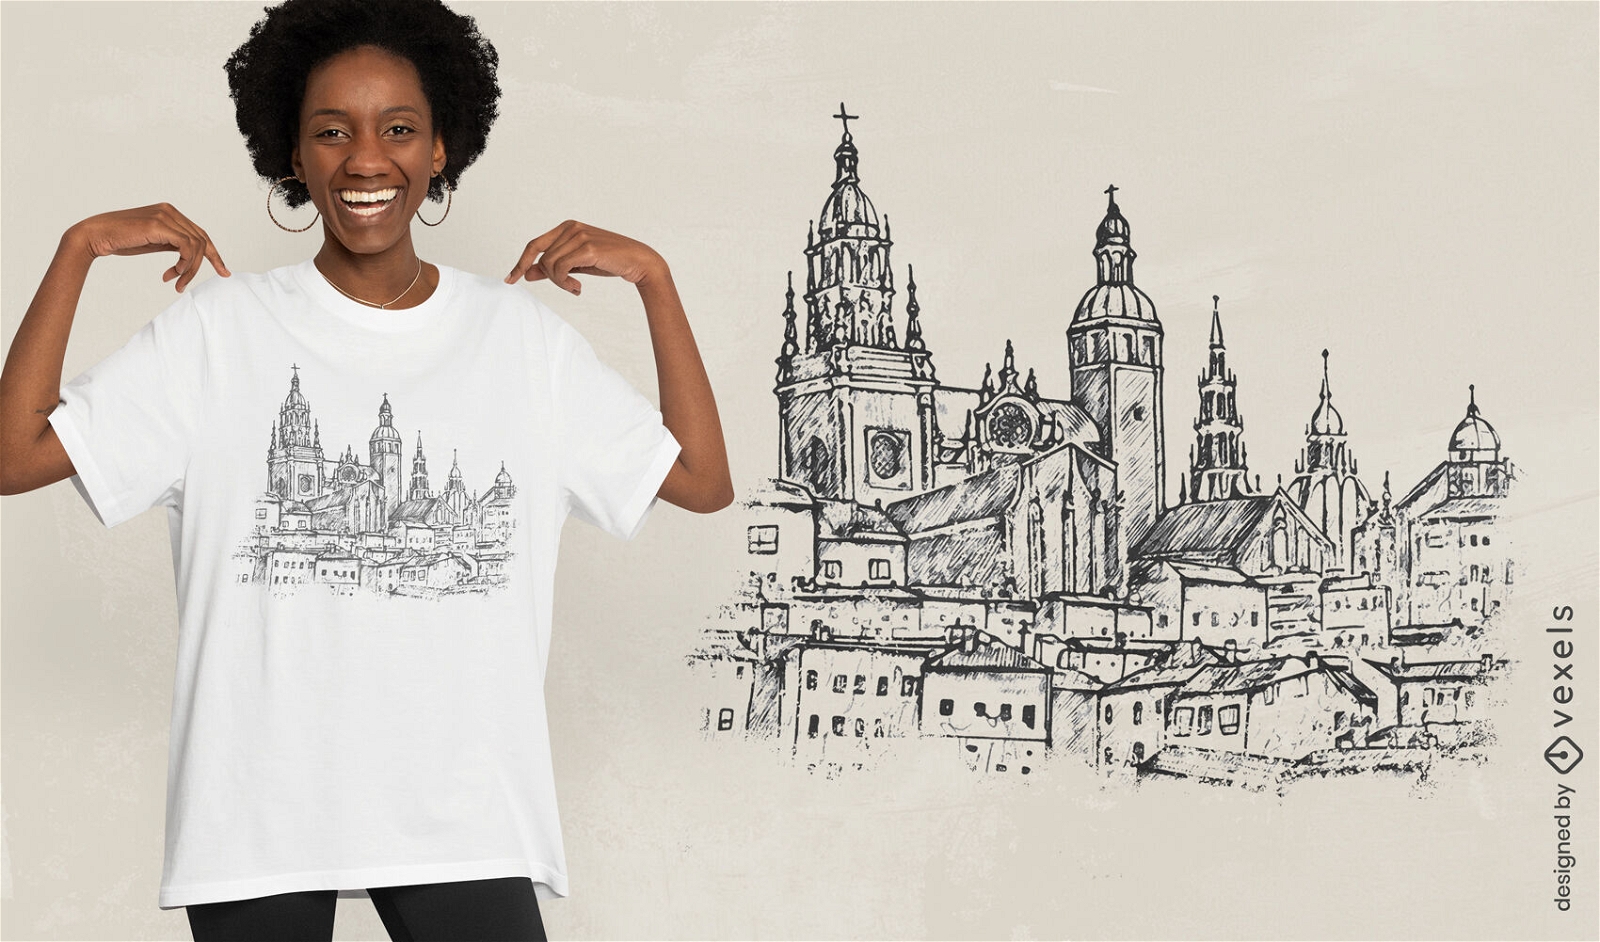 Santiago de Compostela skyline t-shirt design